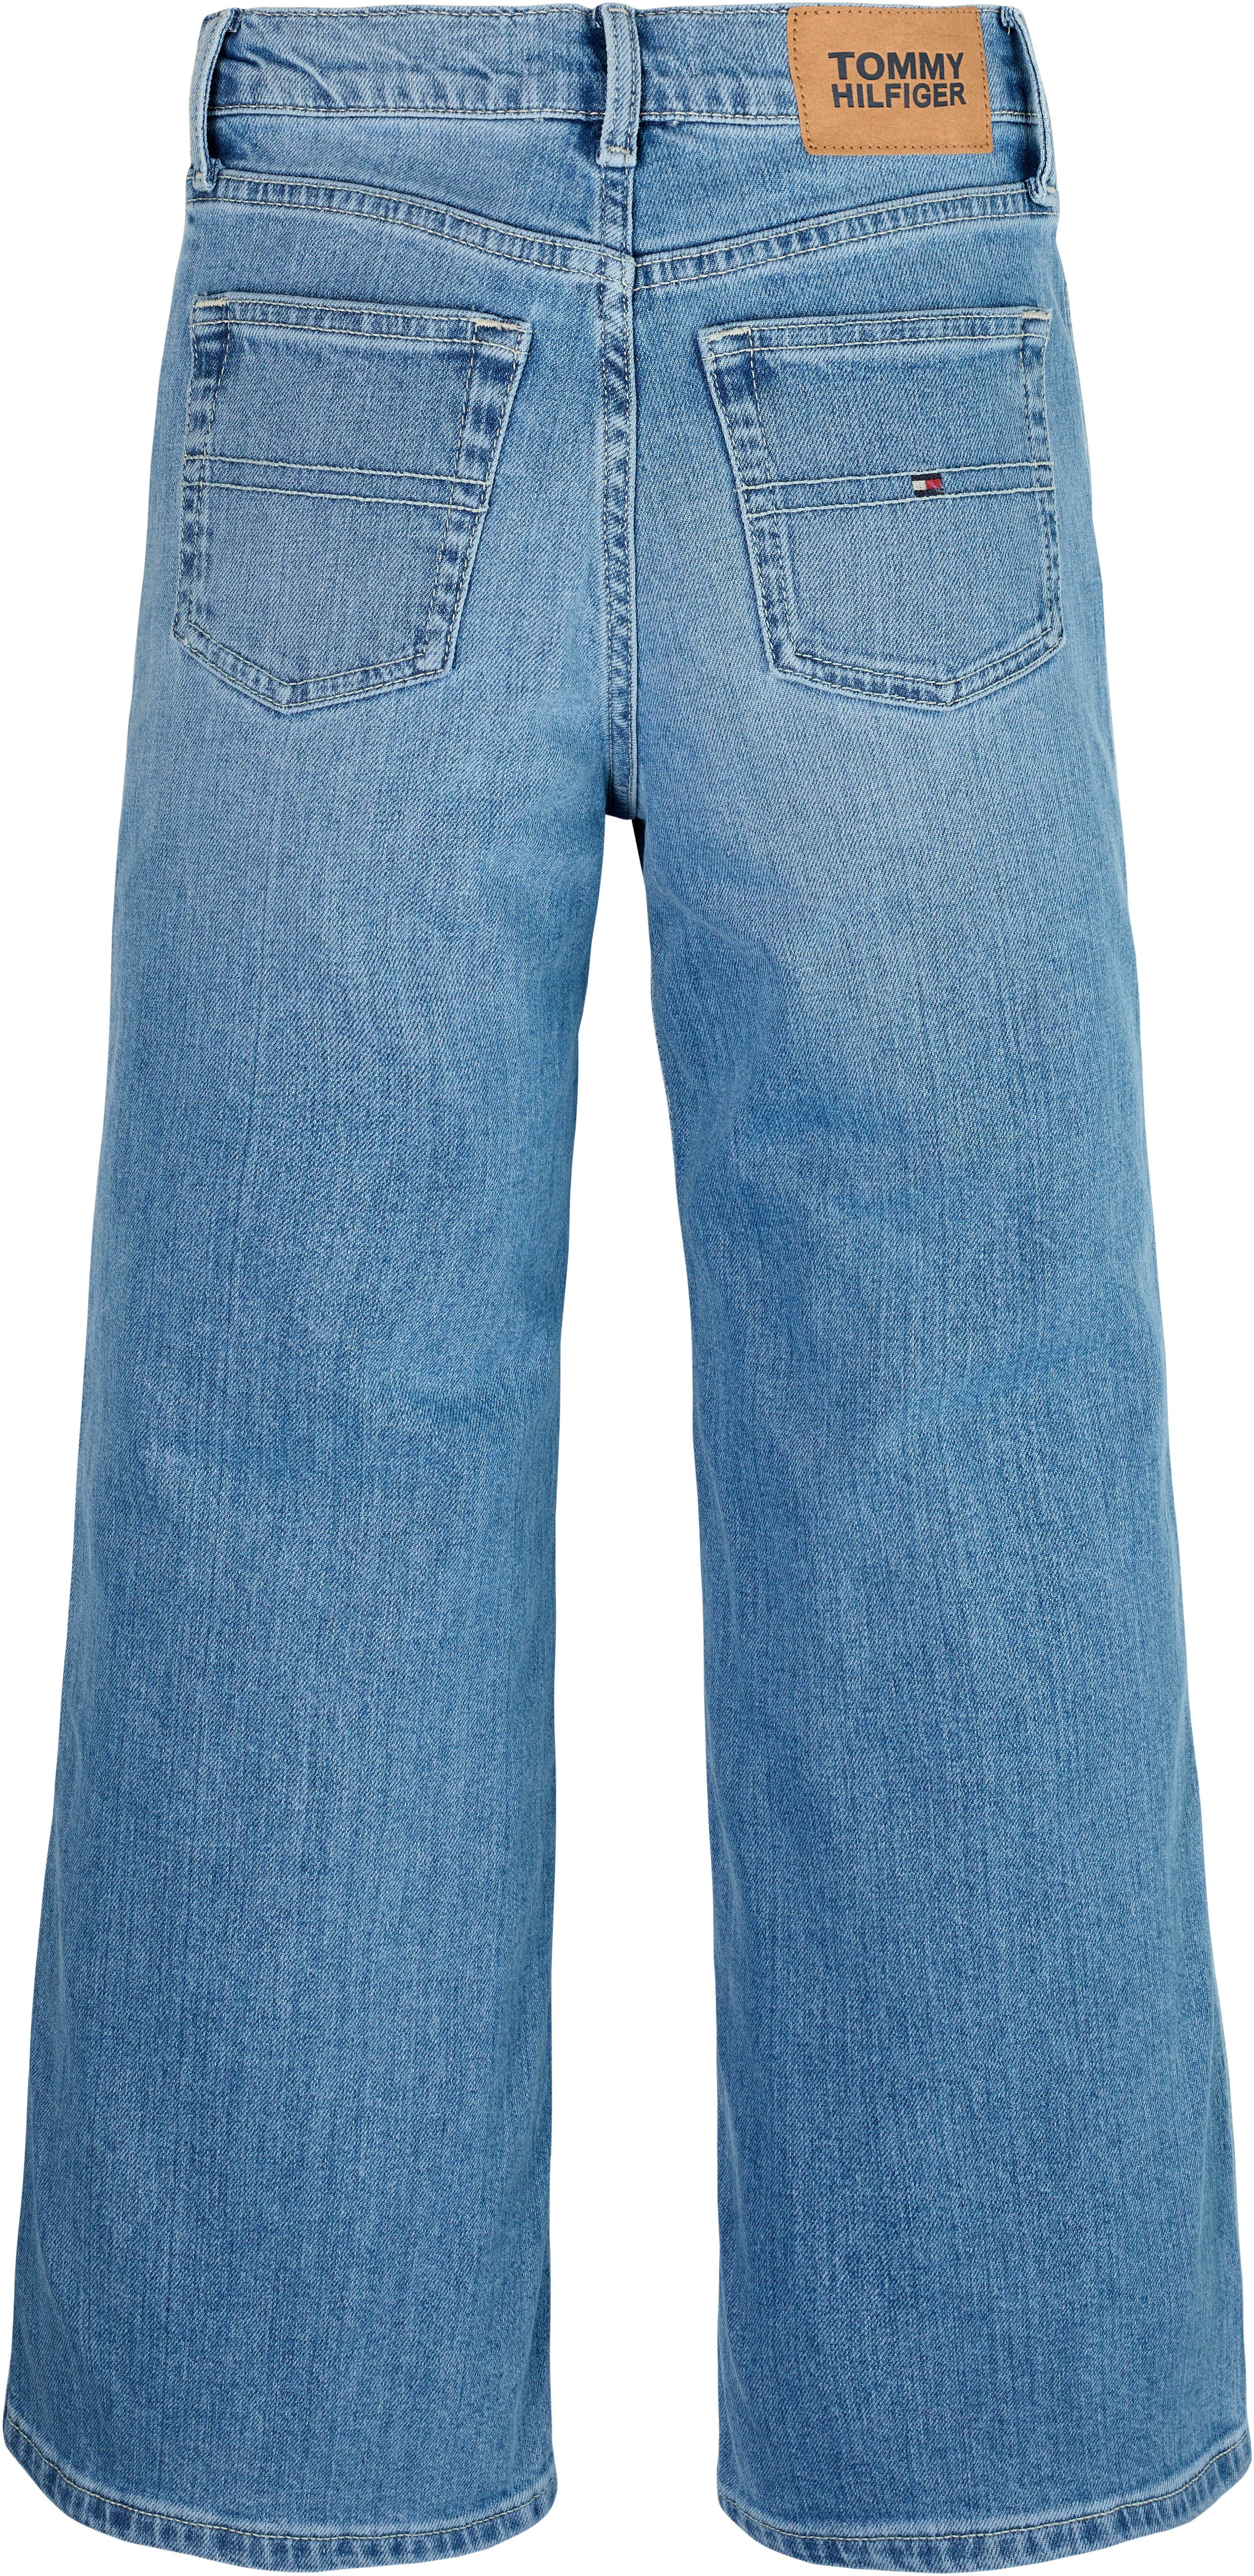 Hilfiger MABEL im Weite 5-Pocket-Style Tommy Jeans MID WASH